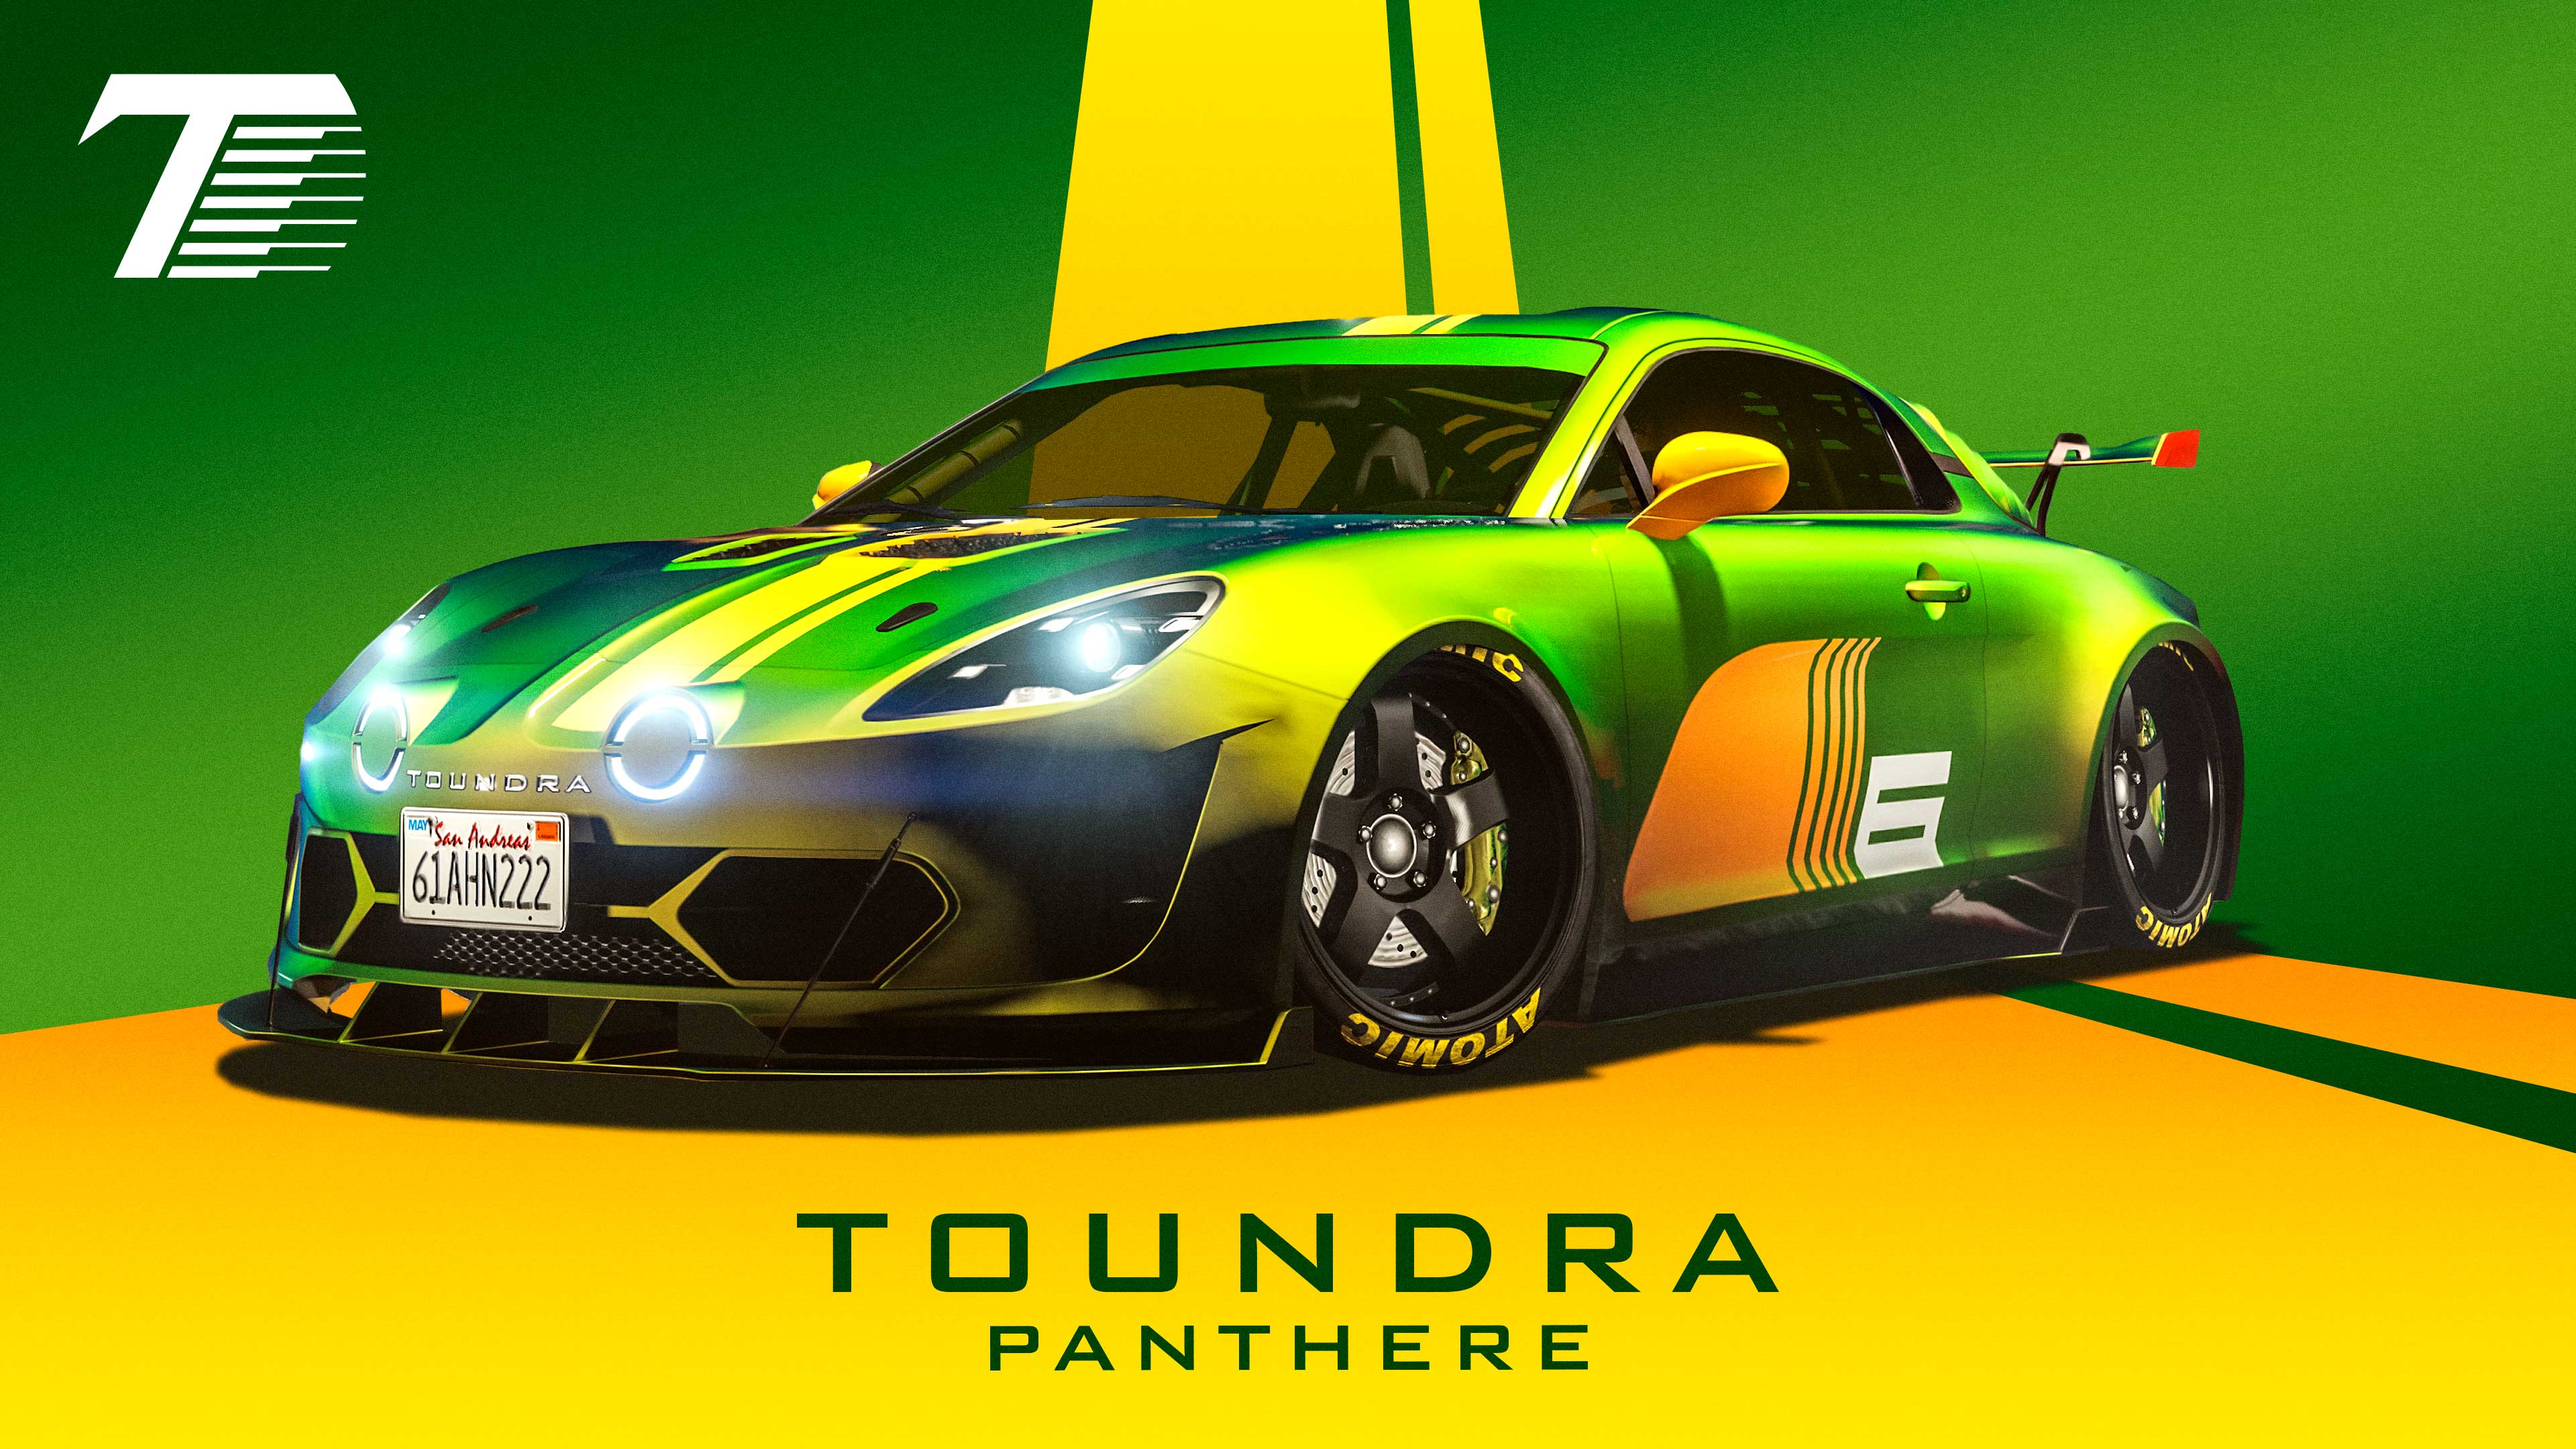 Pôster do carro esportivo Toundra Panthere